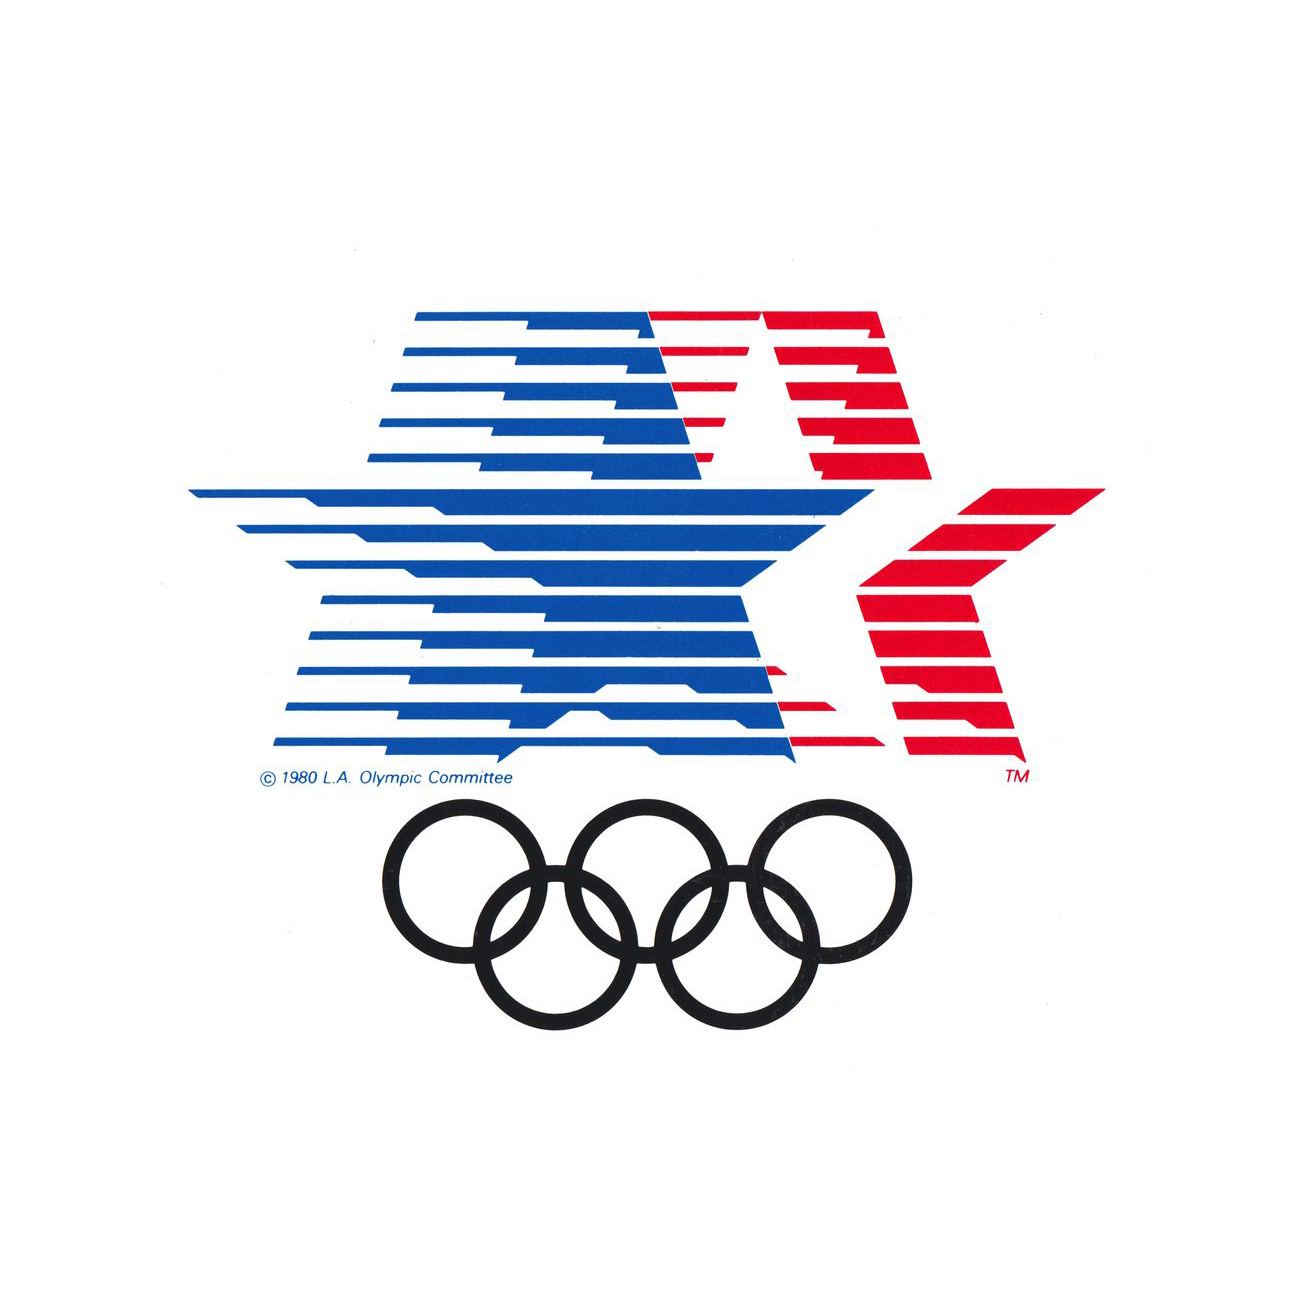 Robert Miles Runyan & Associates' logo for Los Angeles 1984 Olympic Games